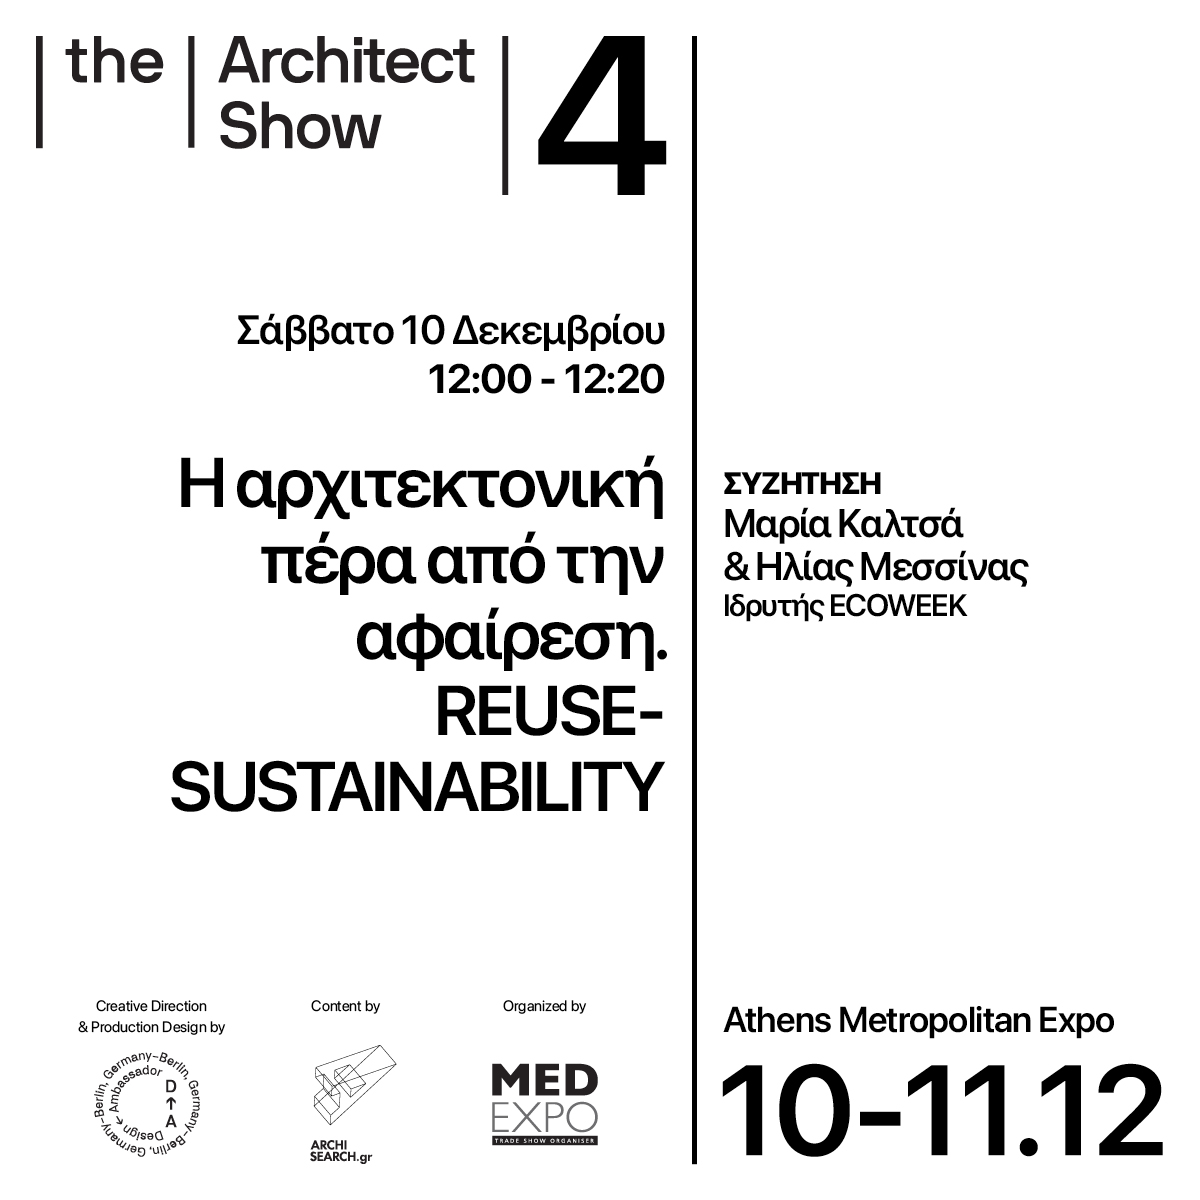 Archisearch The Architect Show 4 _ 'Fast forward', 10&11 Δεκεμβρίου 2022, Metropolitan Expo: τι θα δούμε στο διήμερο συνέδριο που αναμένεται να αποτελέσει μία ανάσα δημιουργικής ανταλλαγής γνώσεων και ιδεών